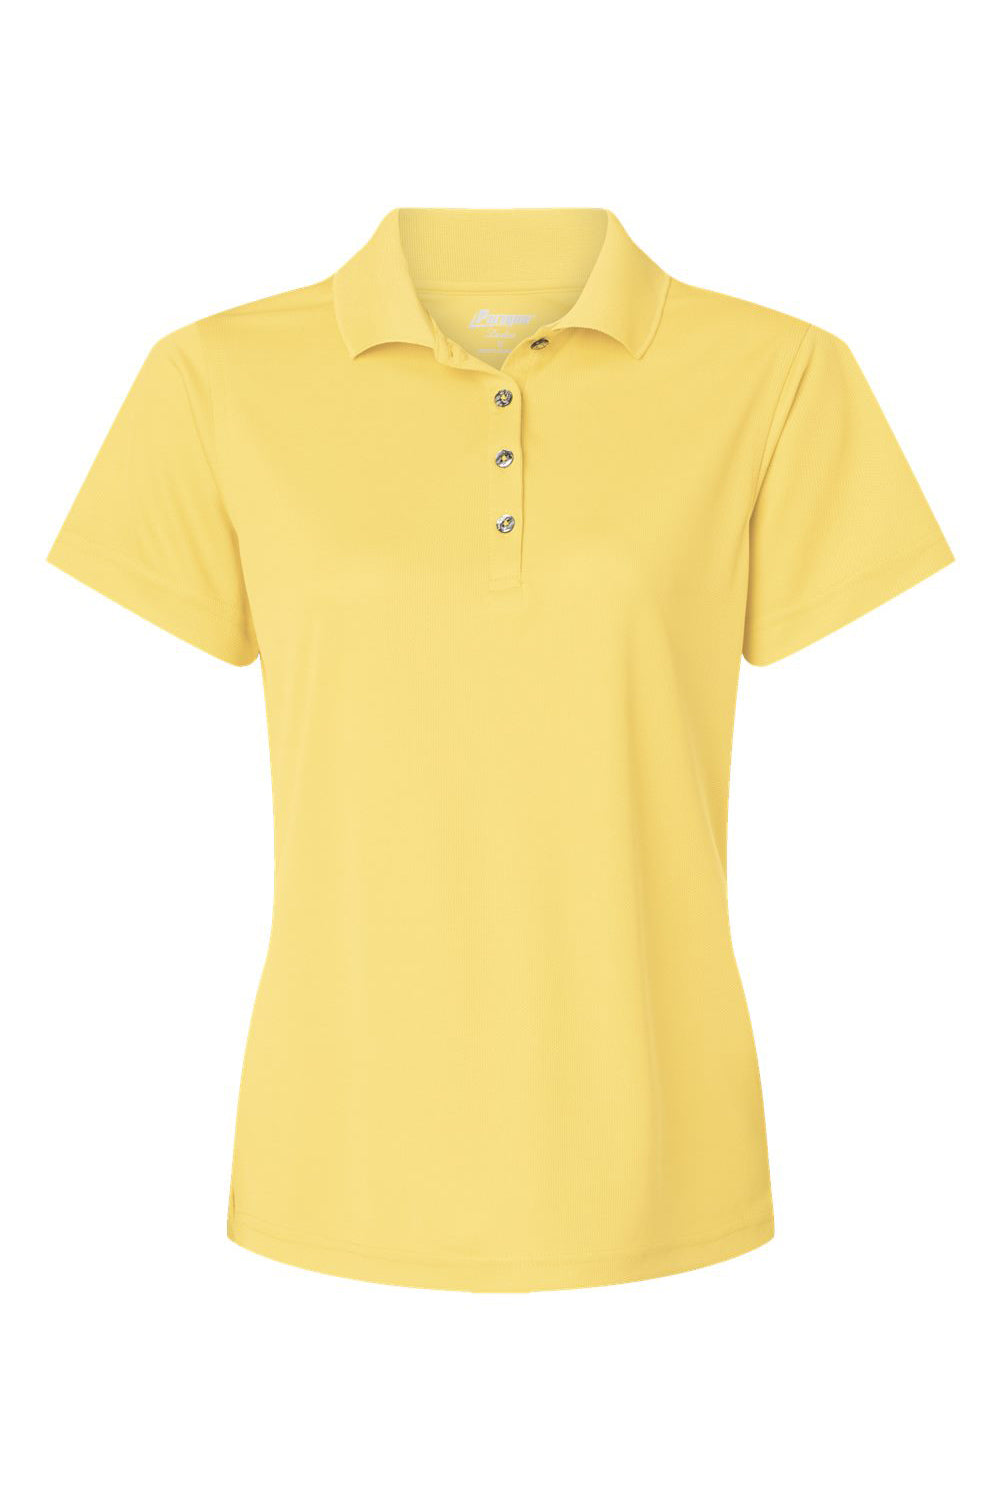 Paragon 104 Womens Saratoga Performance Mini Mesh Short Sleeve Polo Shirt Butter Yellow Flat Front